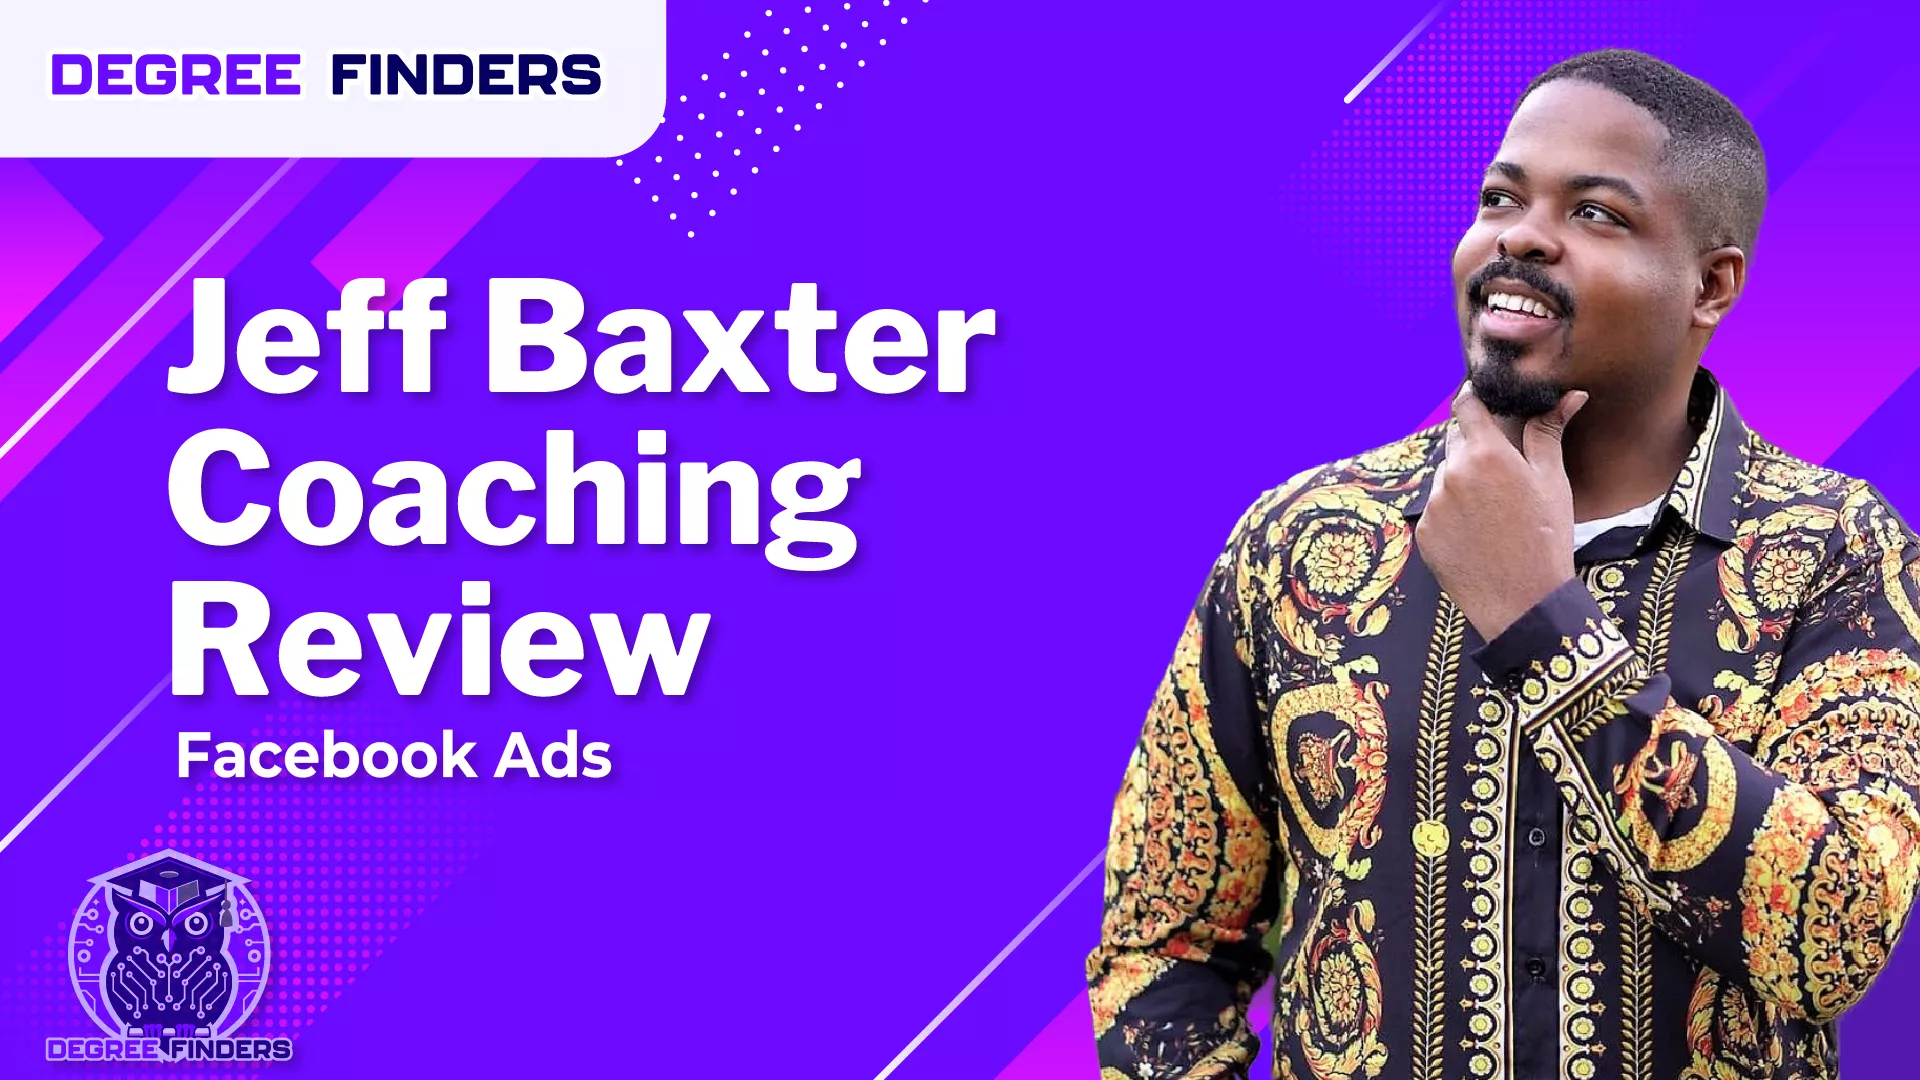 Jeff Baxter Coaching Review